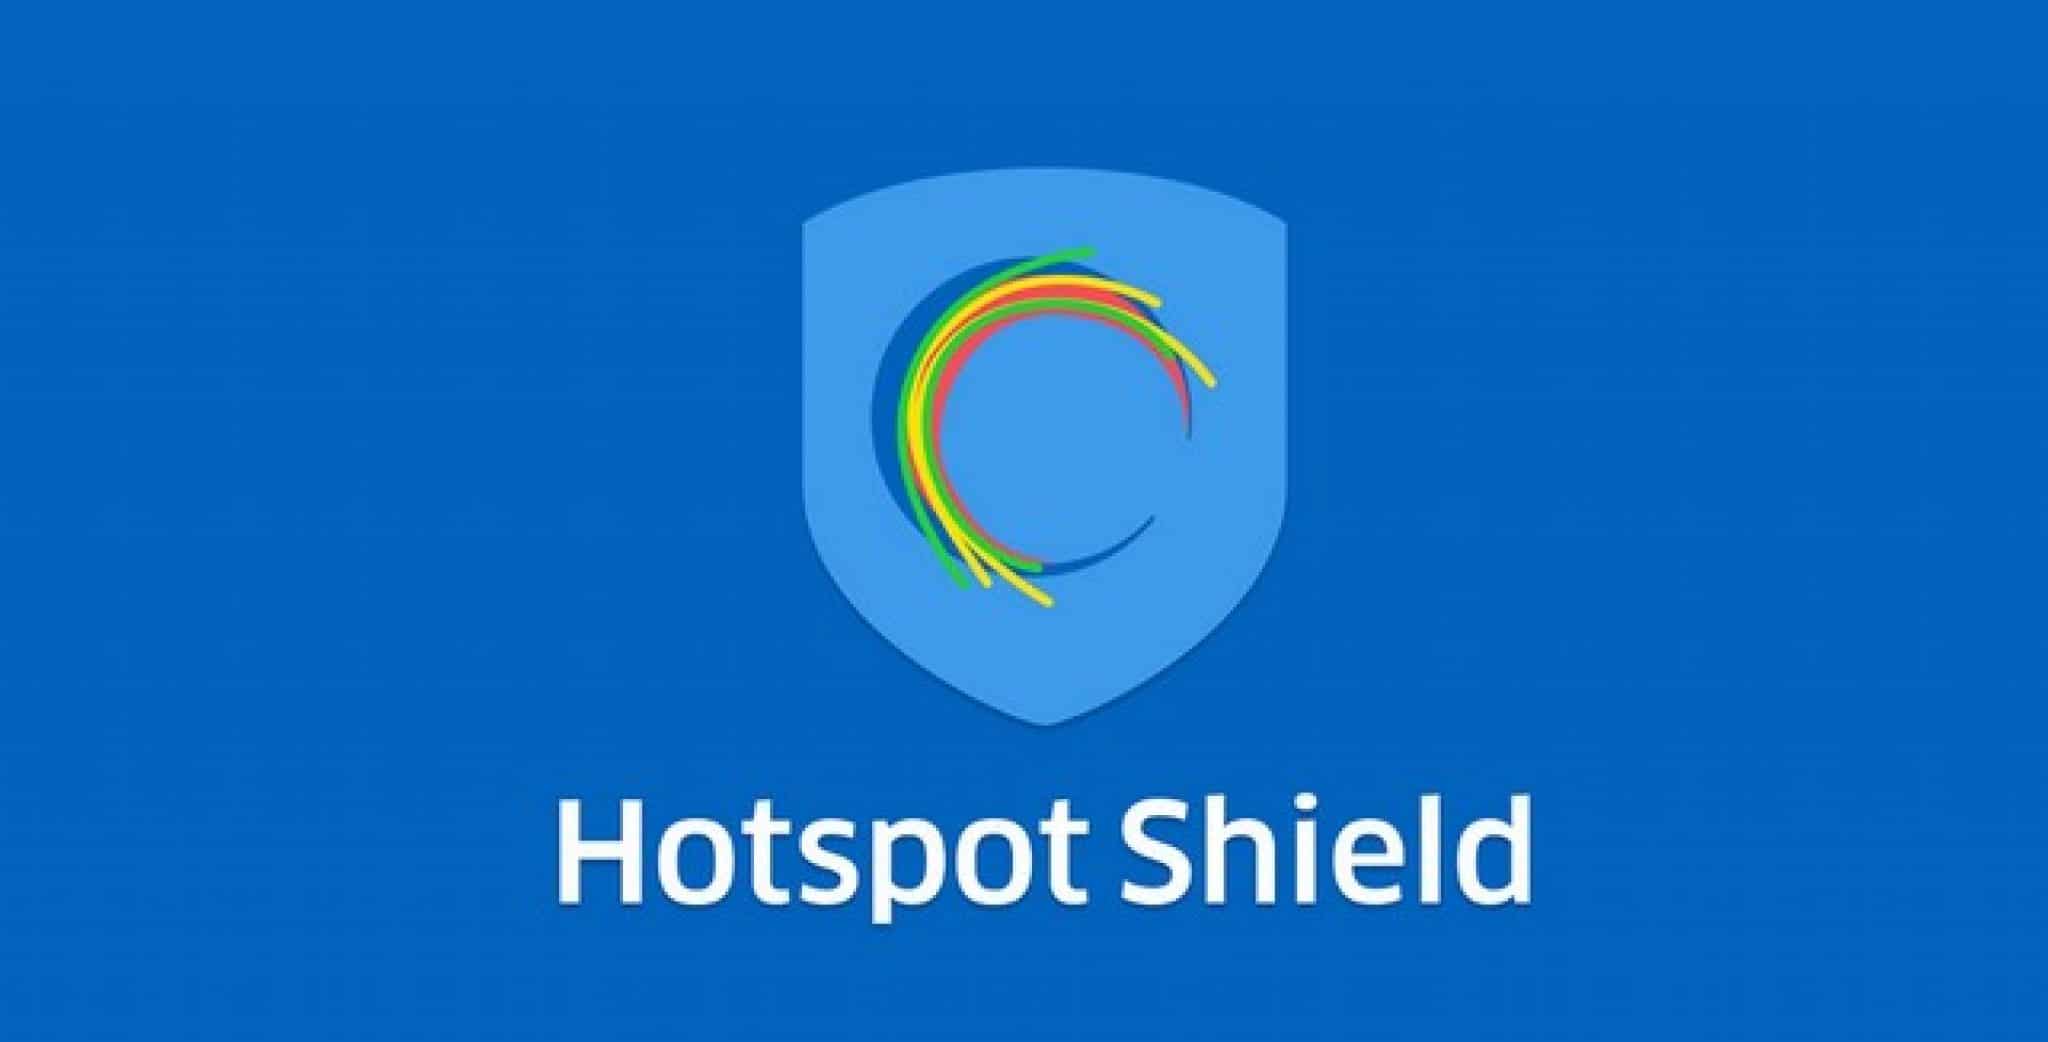 hotspot shield new version for pc